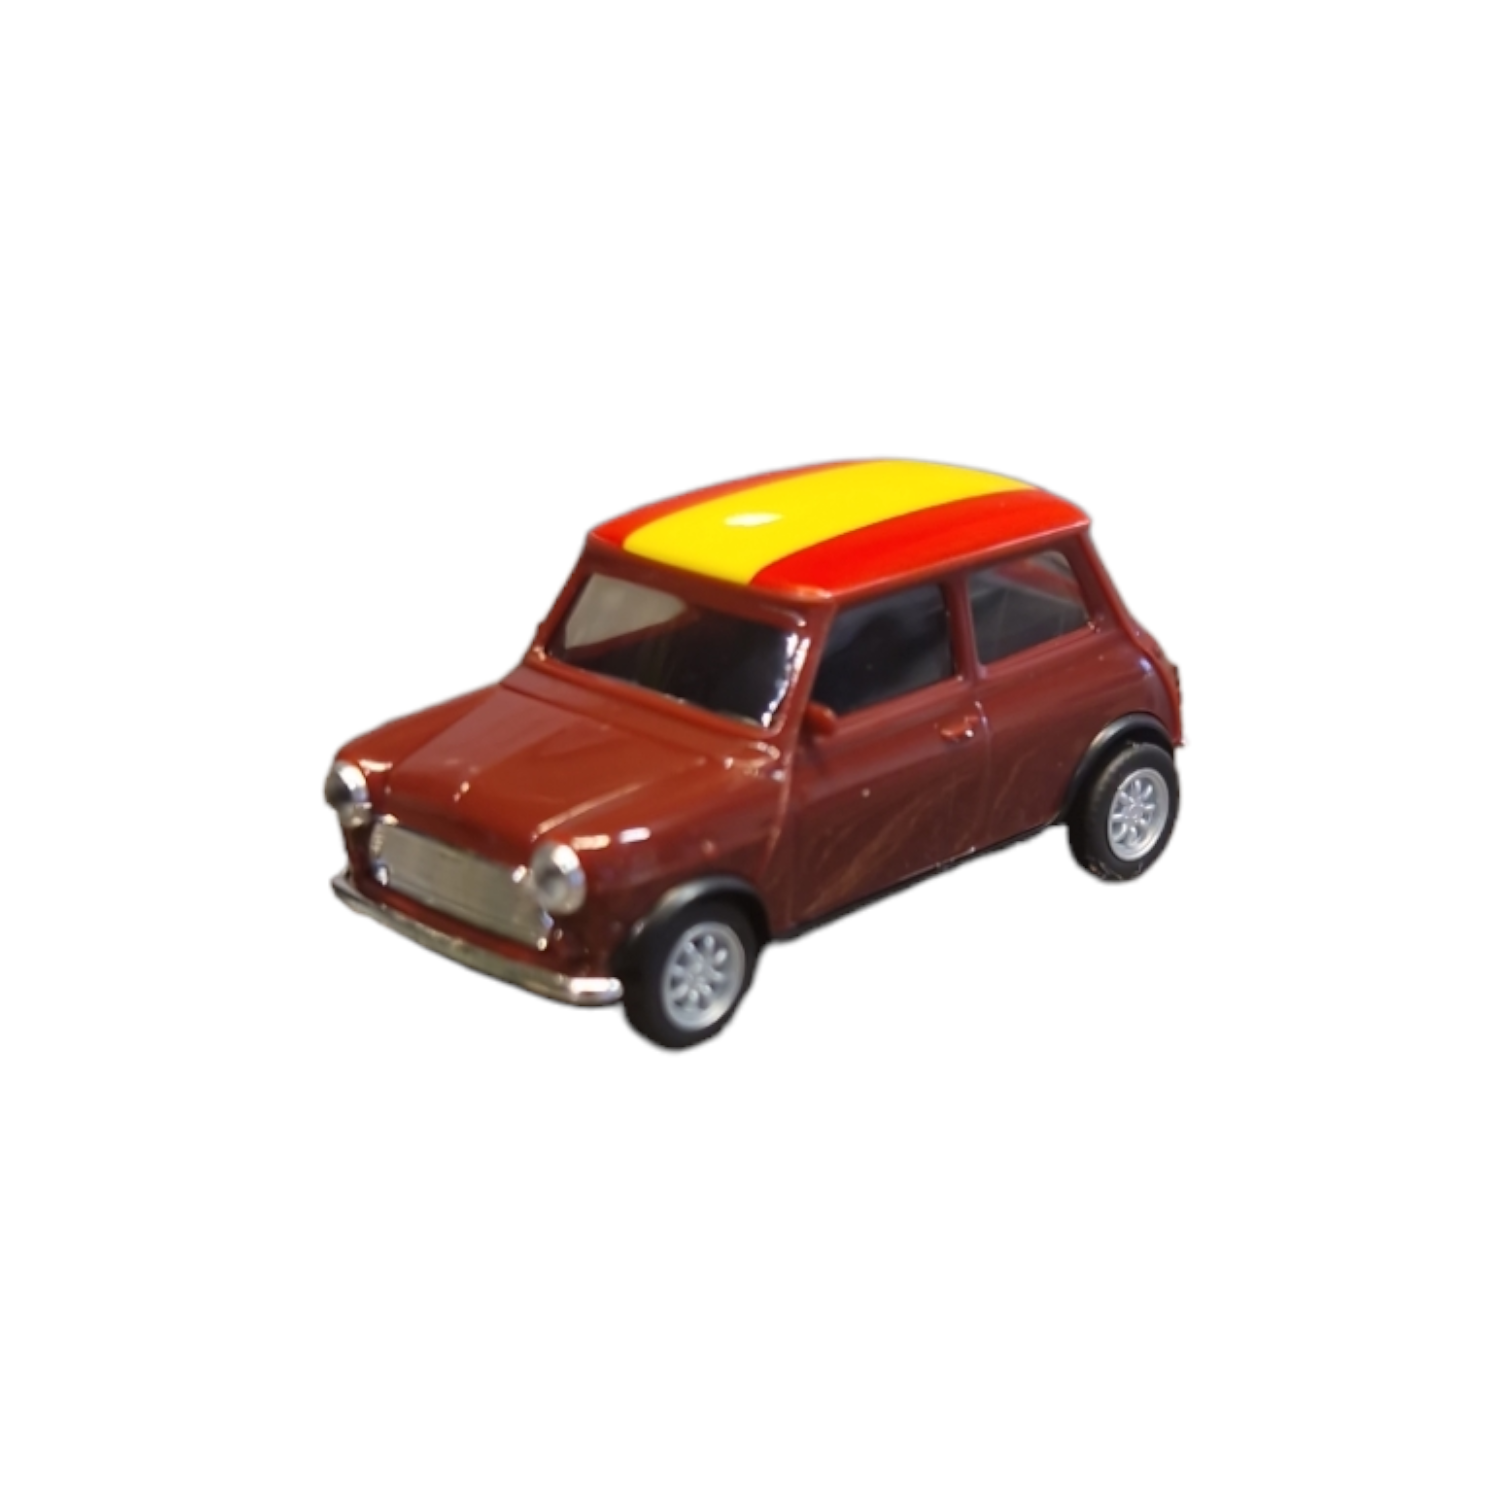 Herpa 420747 Mini Cooper EM21 Spanien Flagge Modellfahrzeug H0 1:87